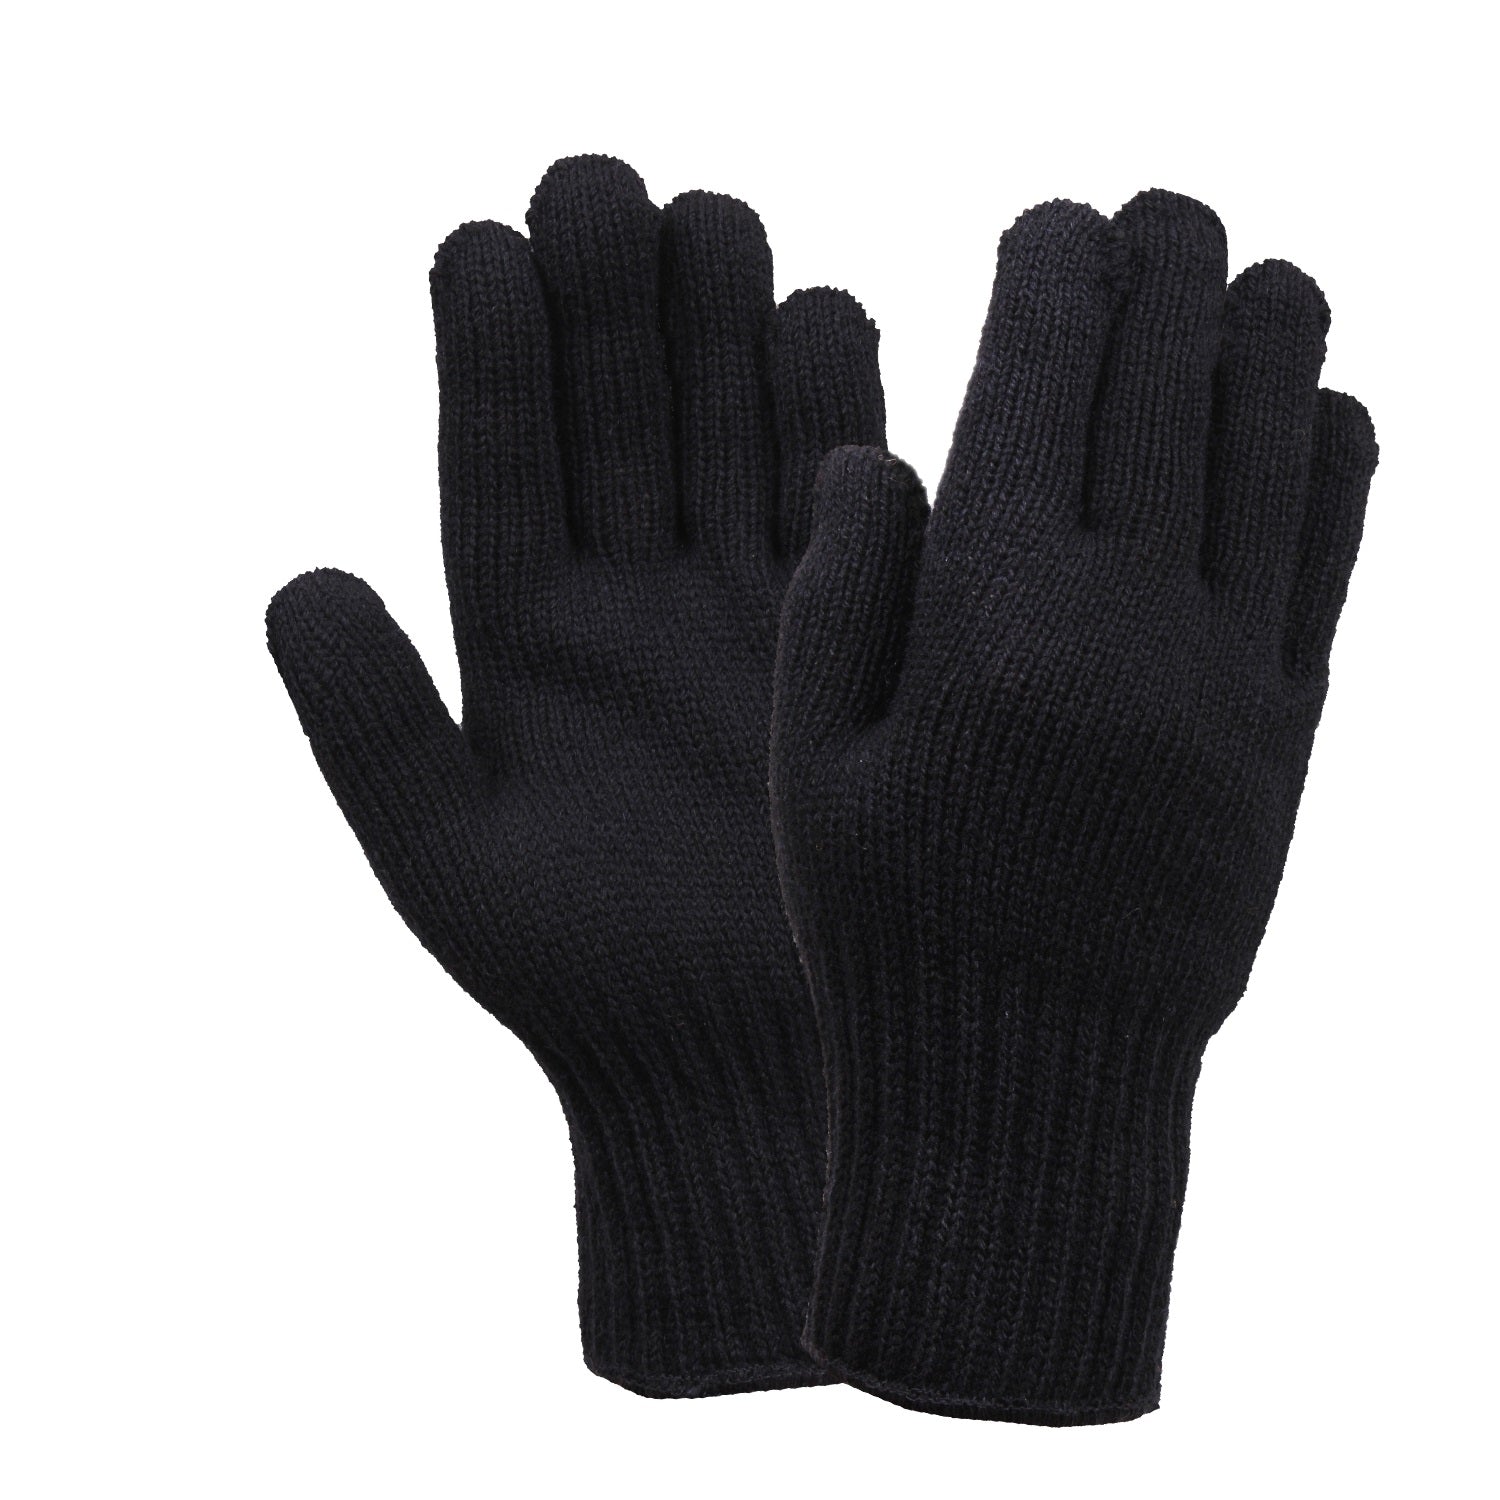 Rothco G.I. Glove Liners Black